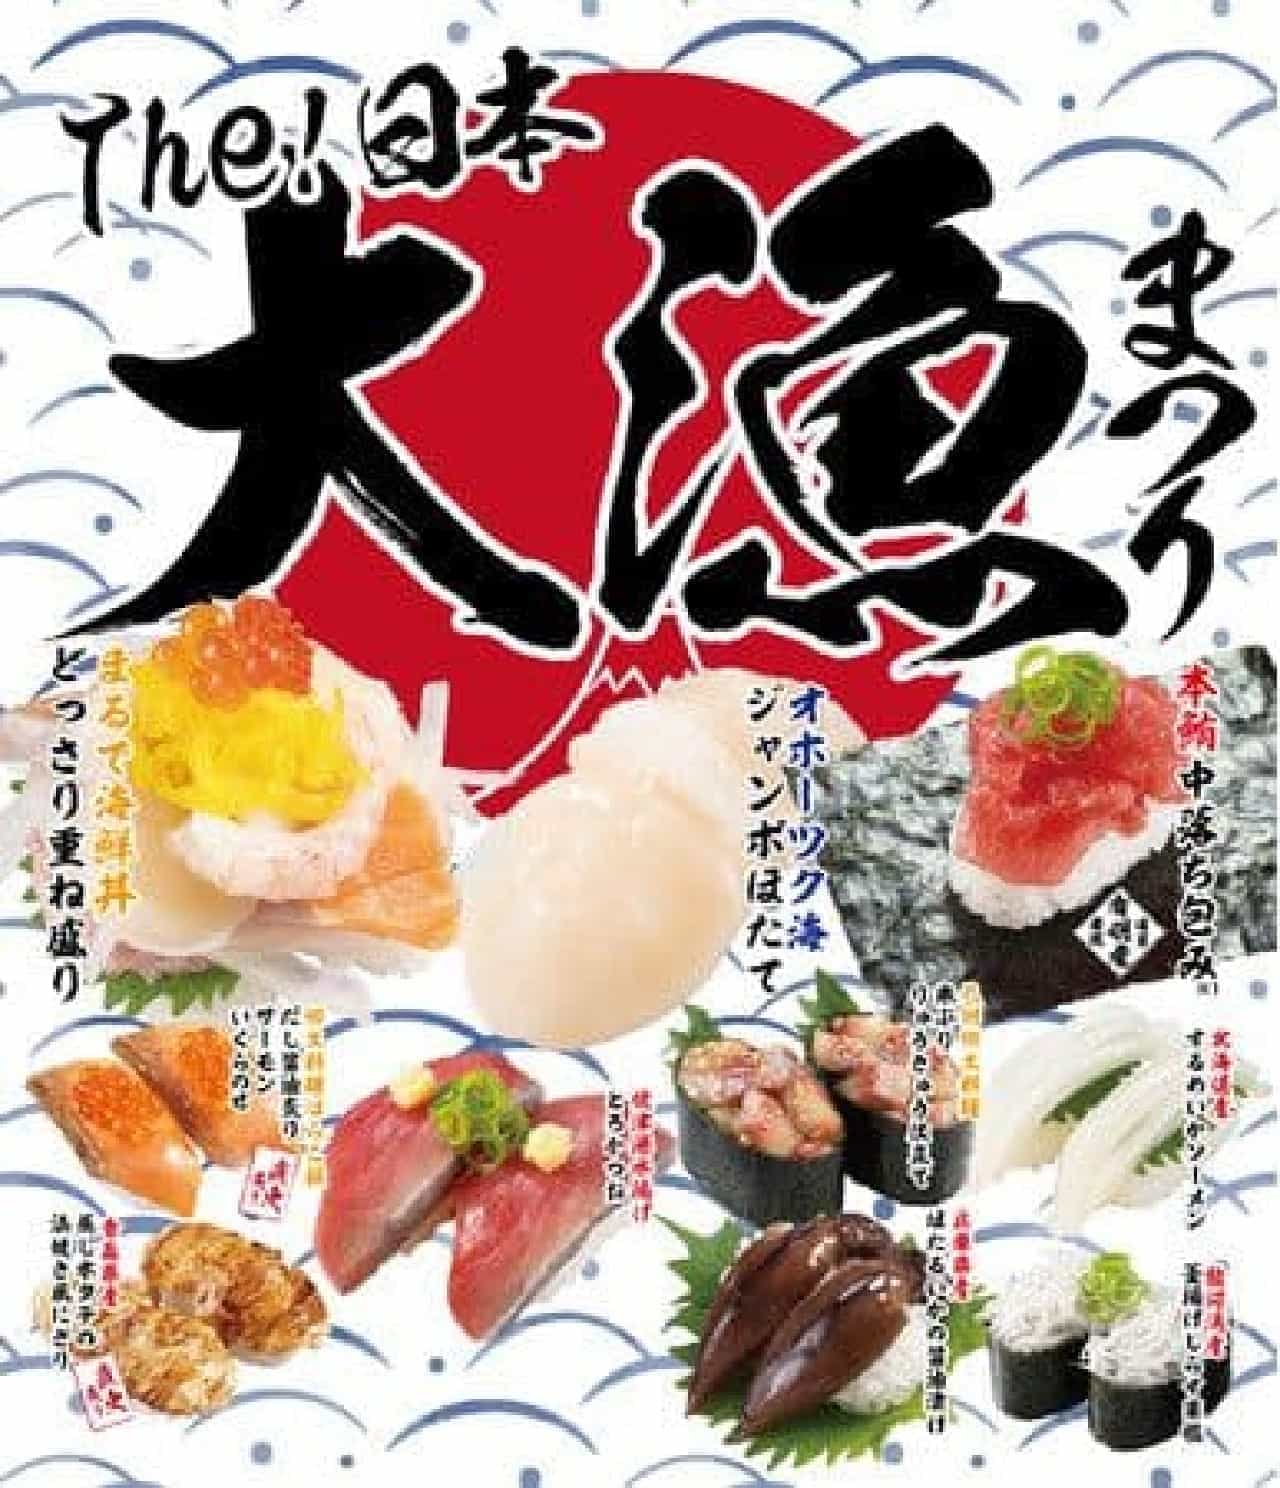 Kappa Sushi "The! Japan Big Fishing Festival" Fair